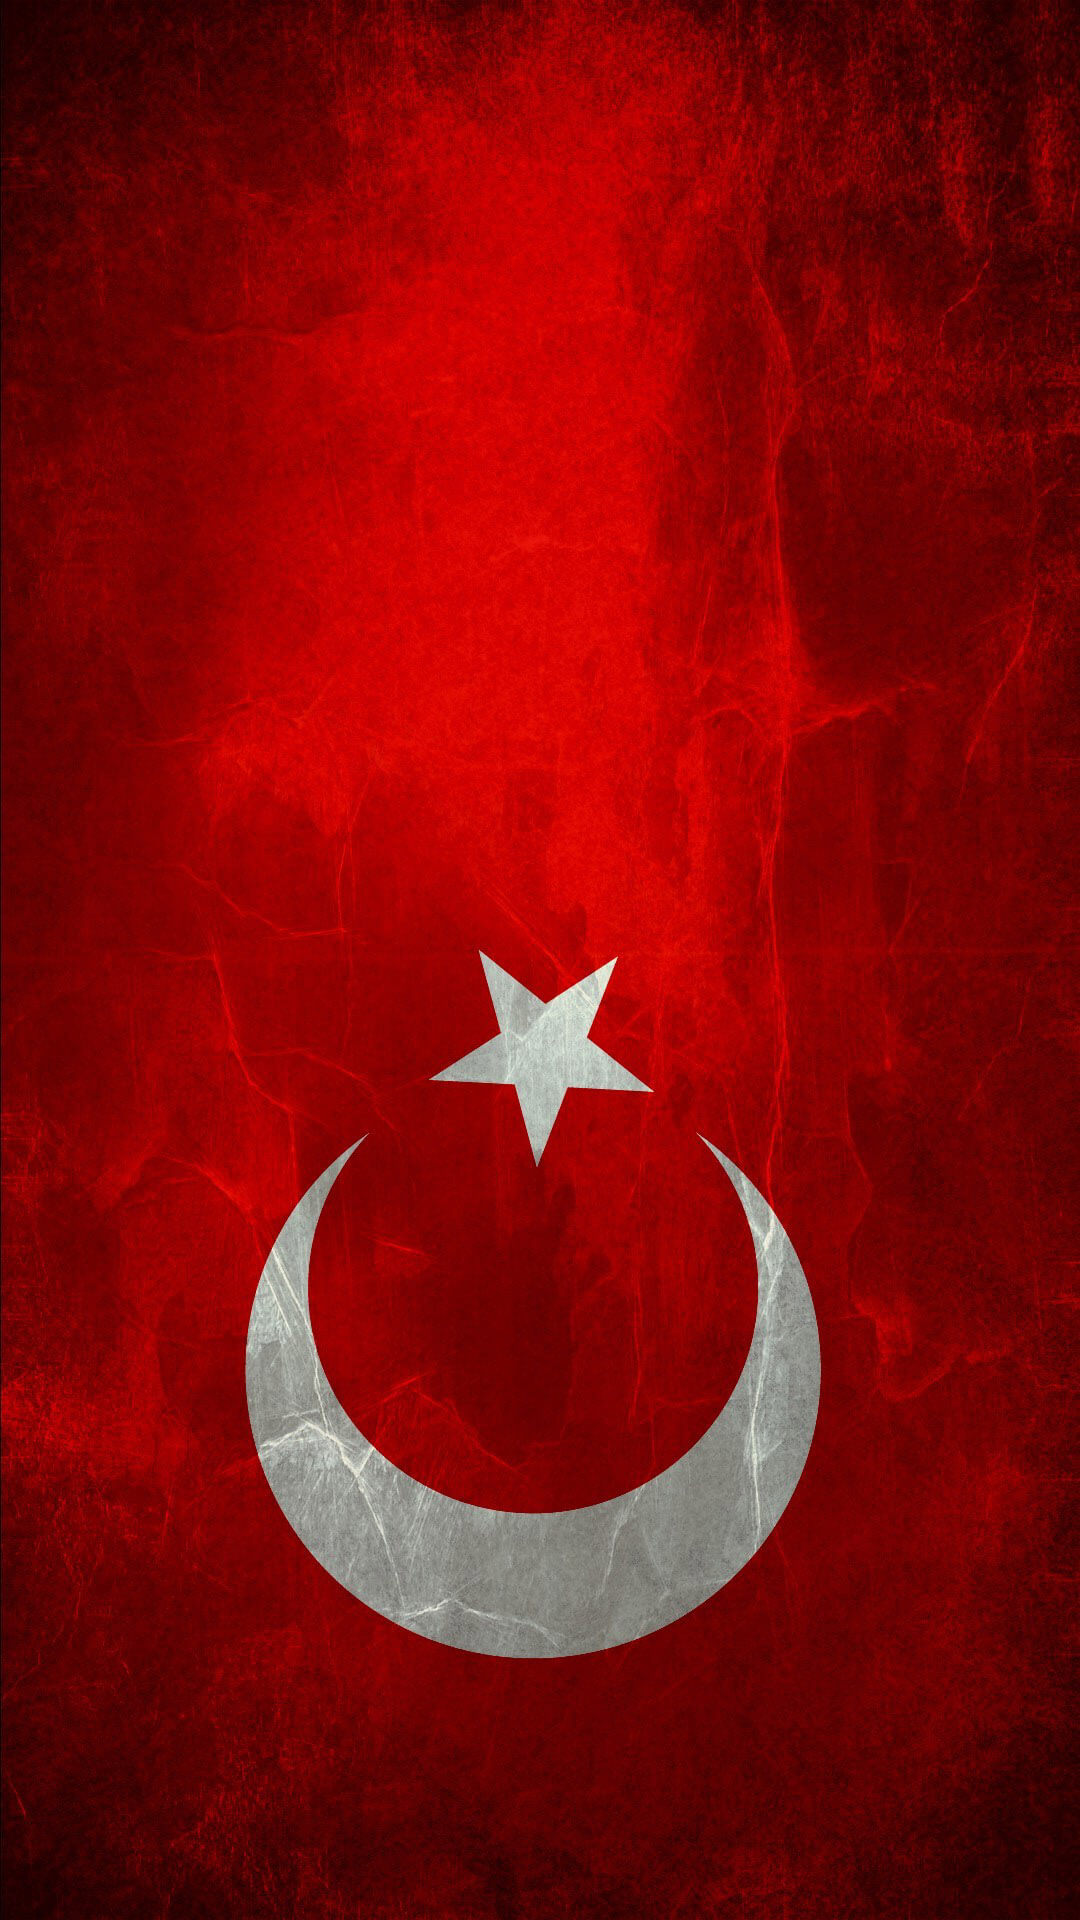 t rk bayra壁紙hd 3d,赤,国旗,図,三日月,シンボル